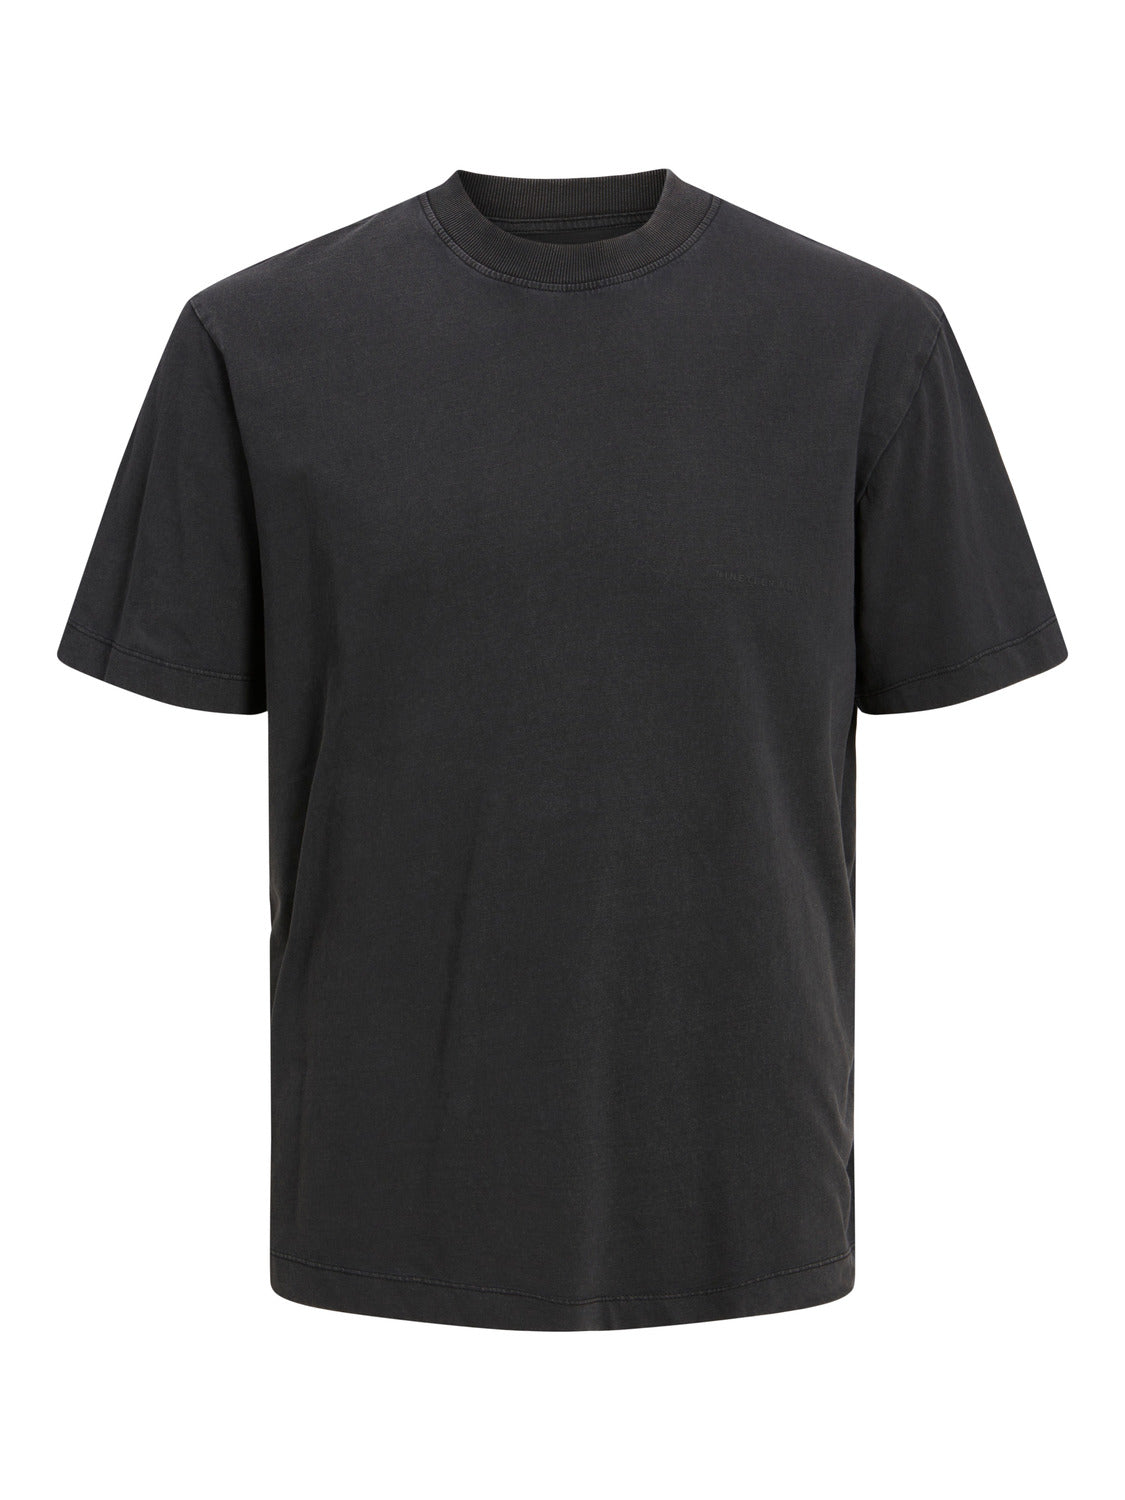 JORDUST T-Shirt - Black